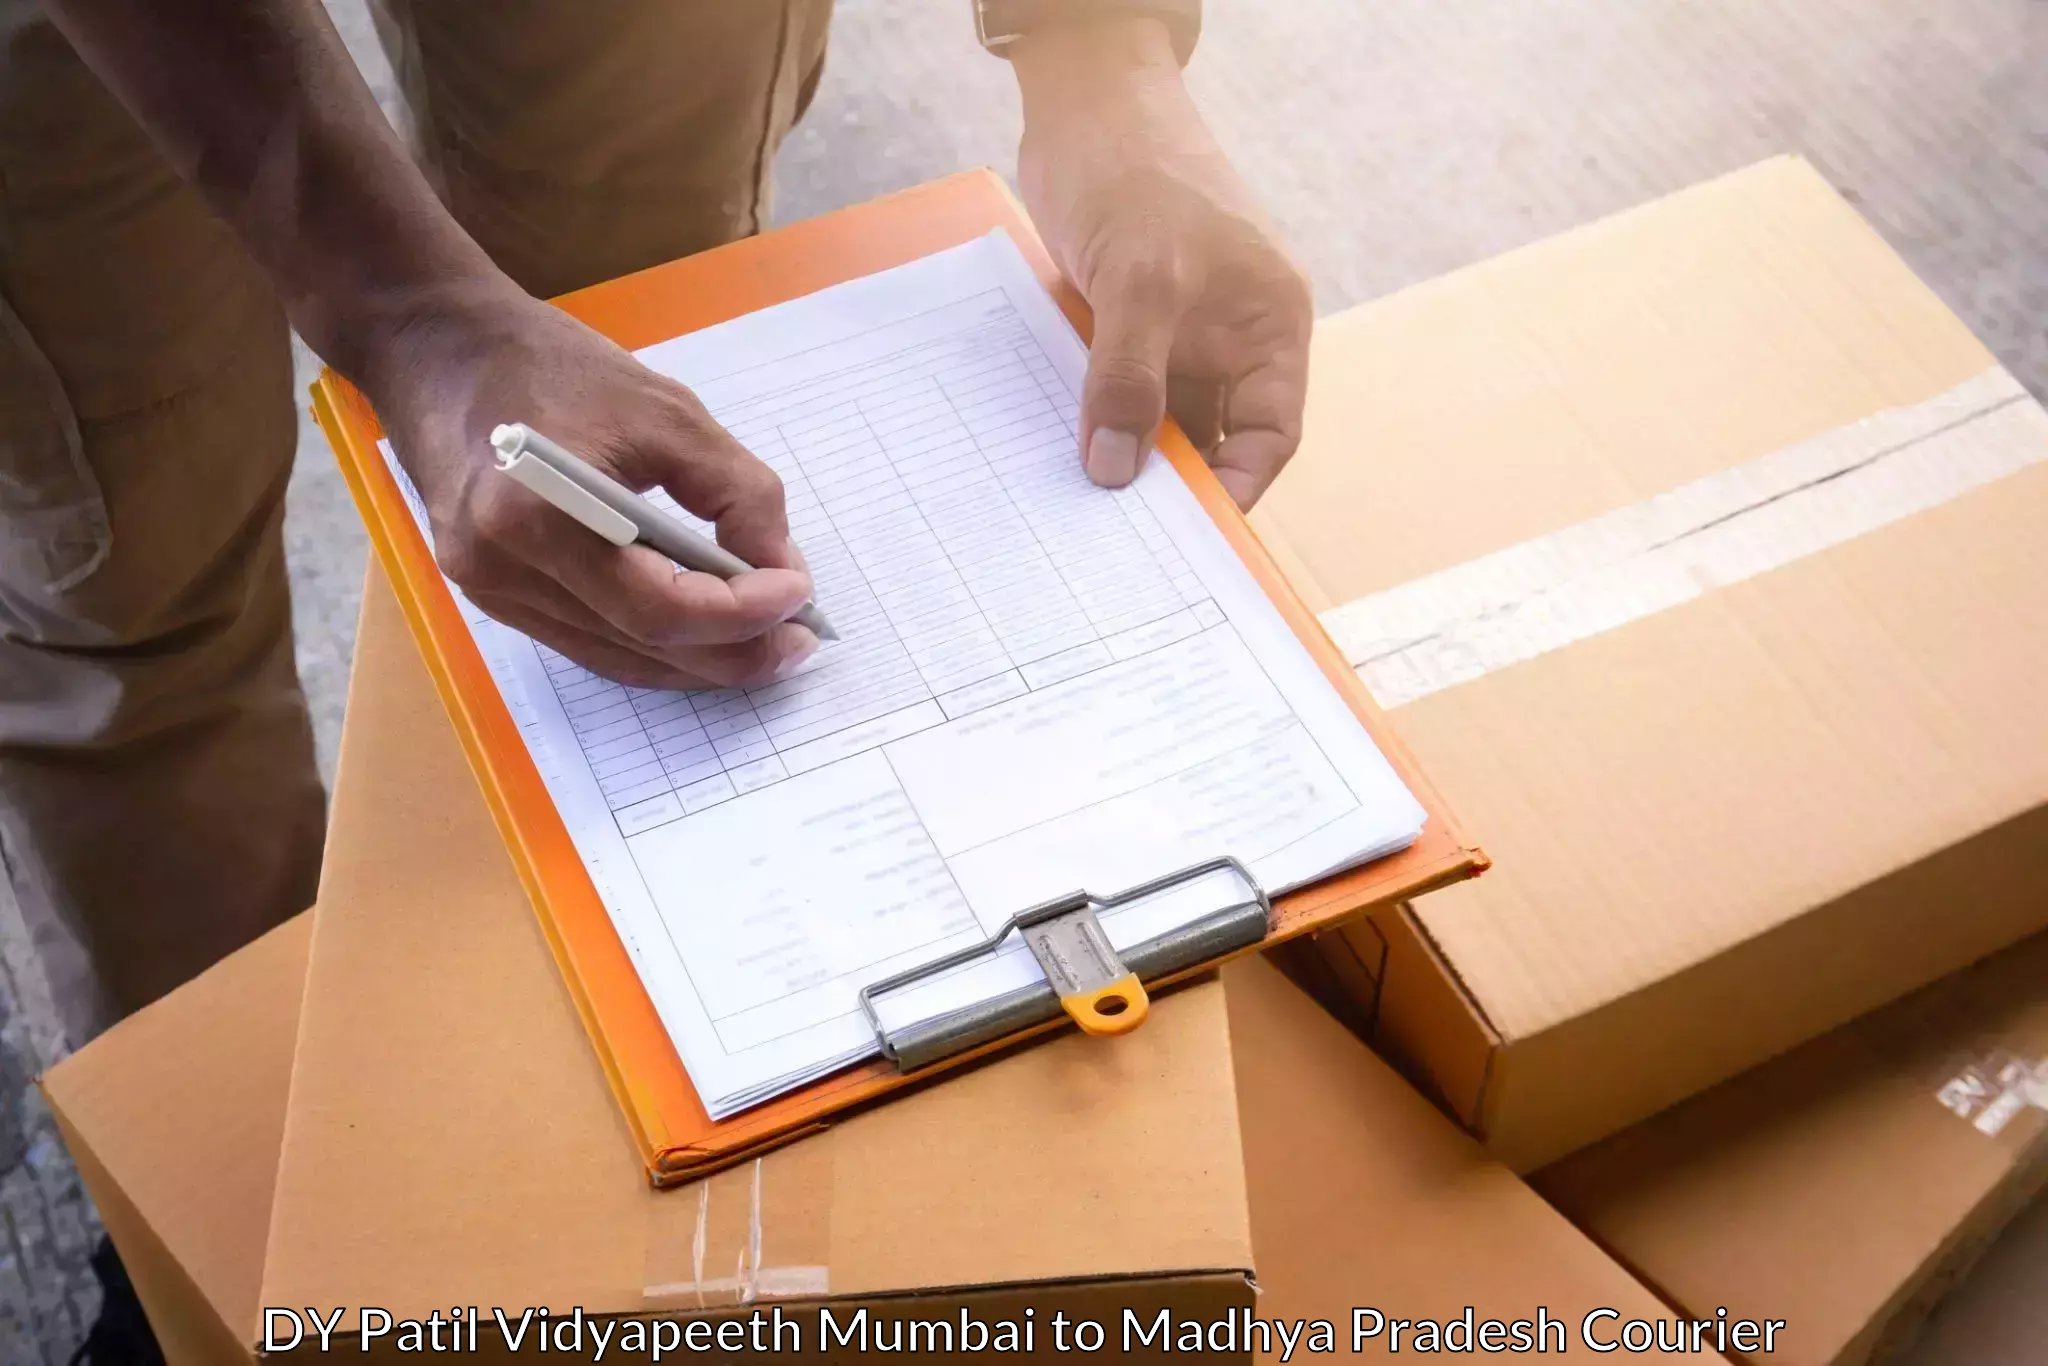 Secure freight services DY Patil Vidyapeeth Mumbai to Lavkush Nagar